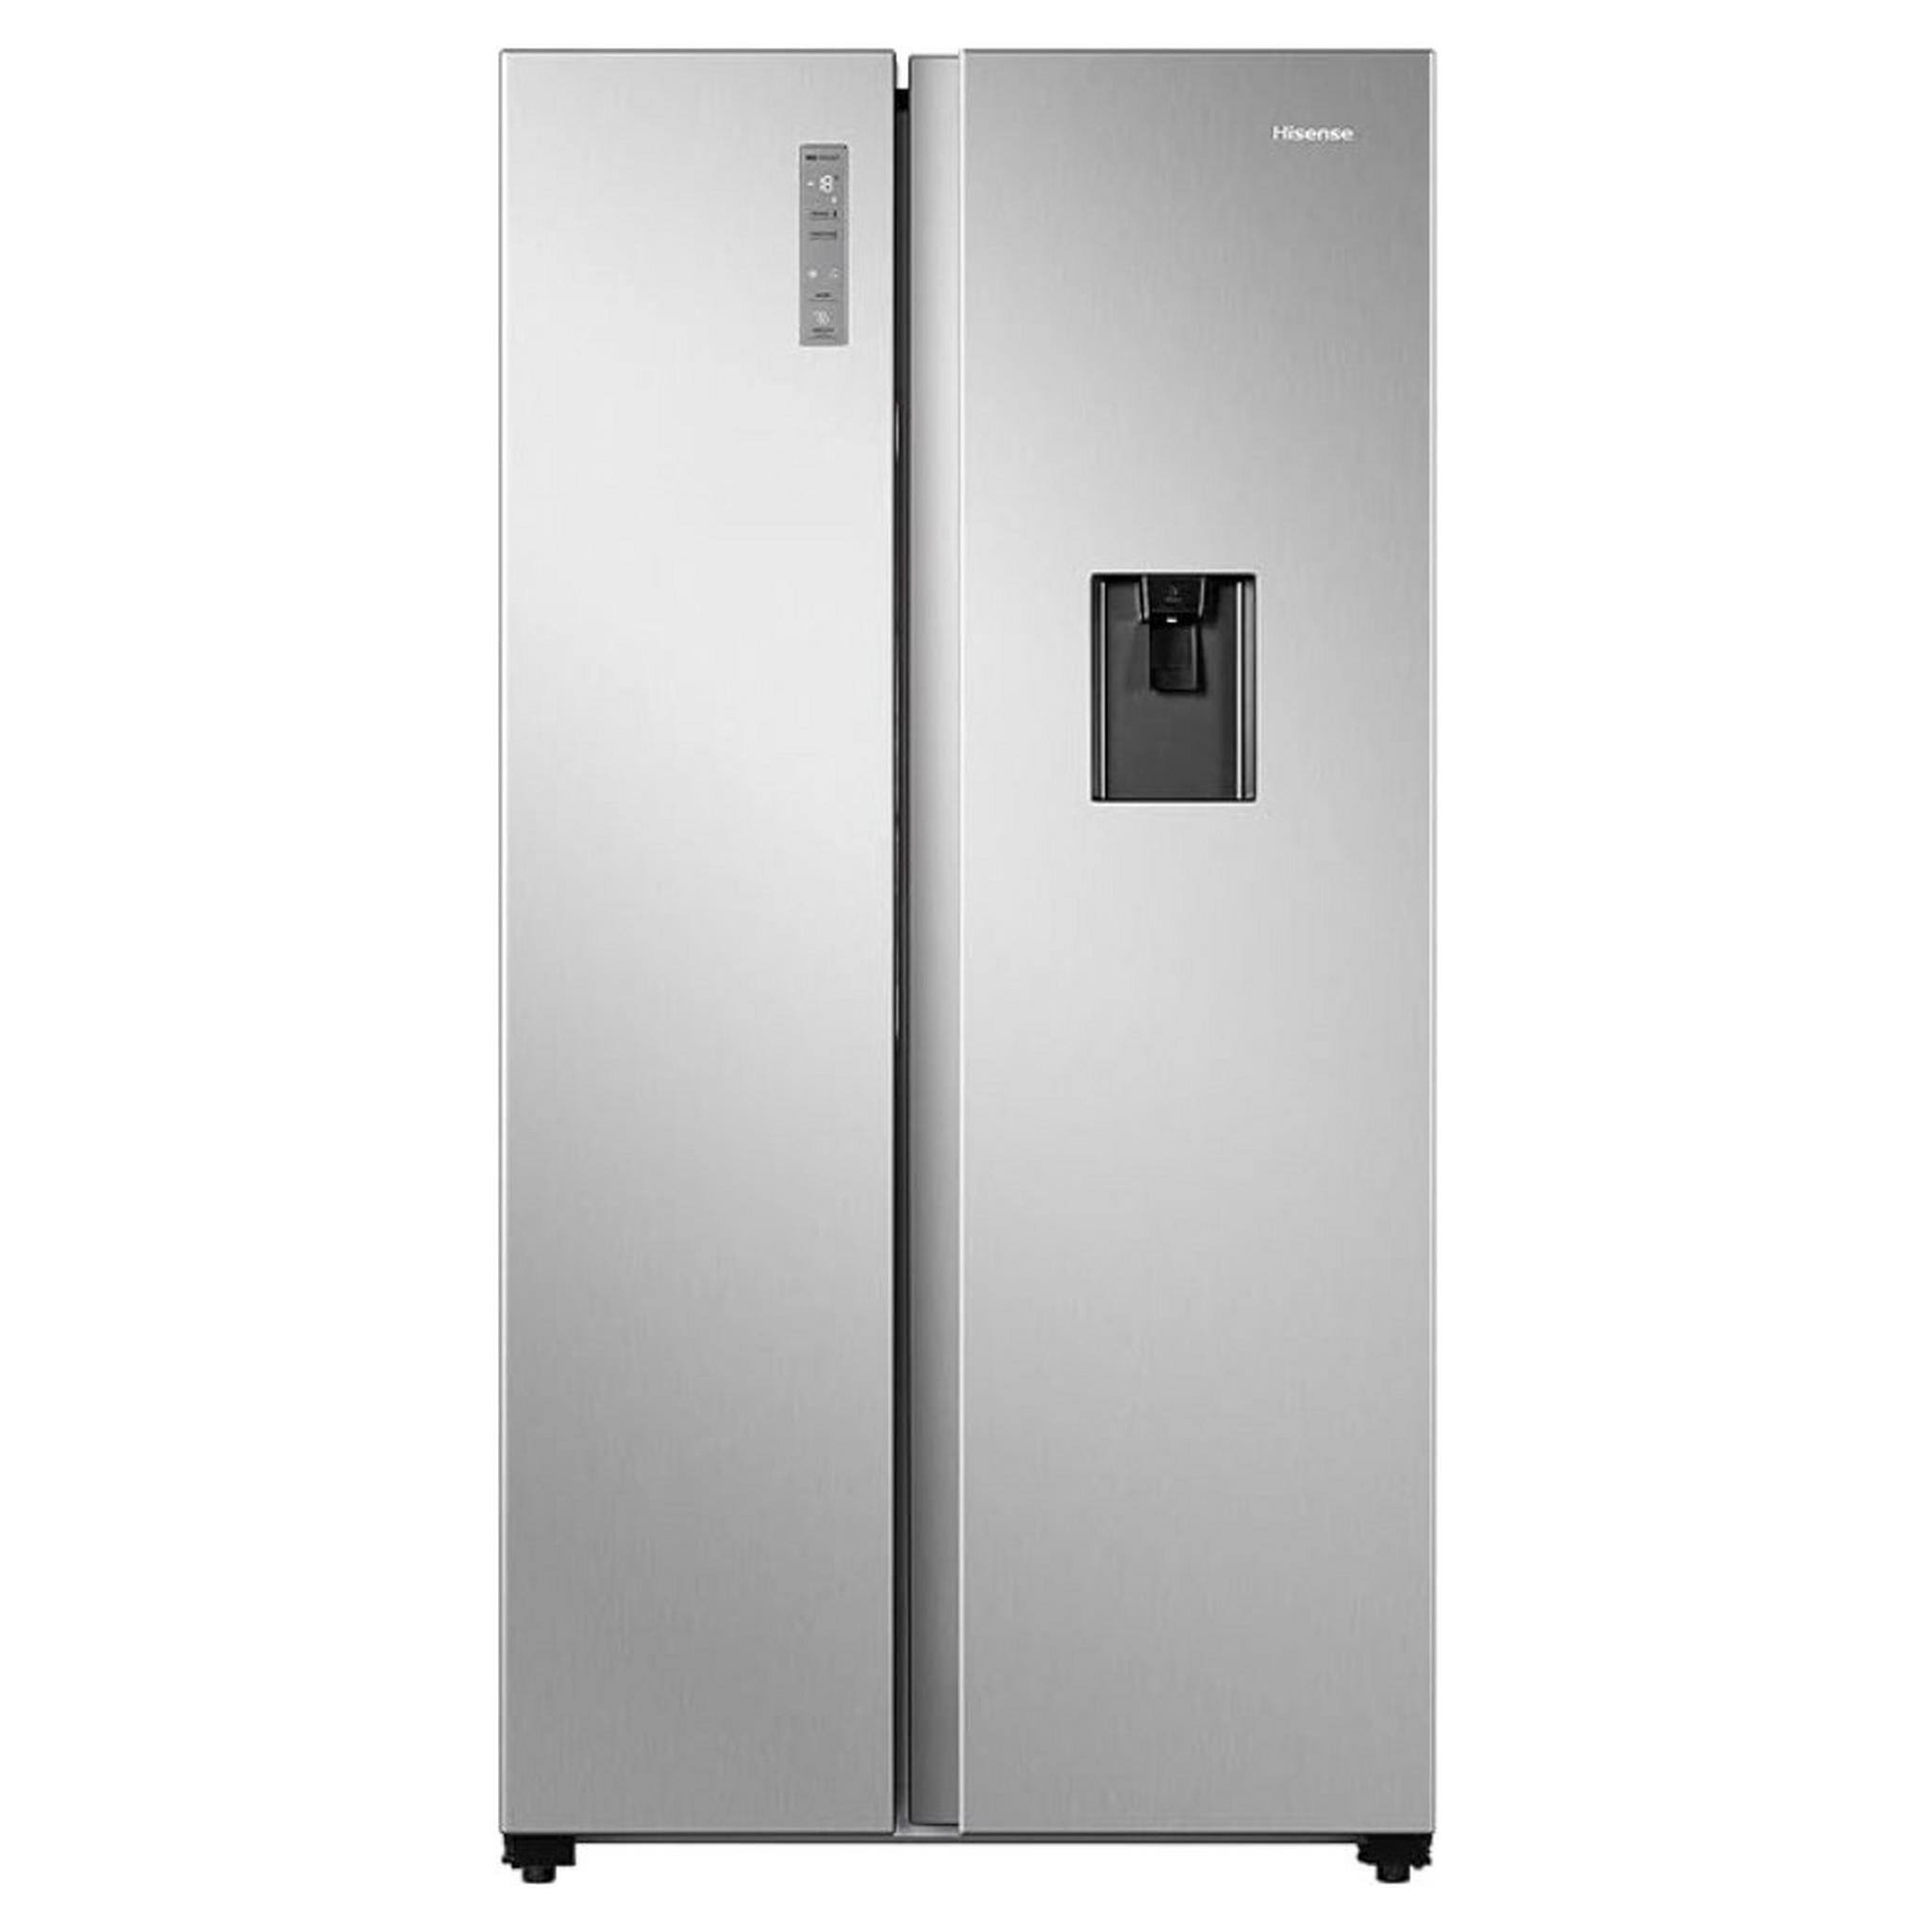 Hisense Side by Side Refrigerator, 24 CFT, 670 Liters, RS670N4WSU1 – Inox